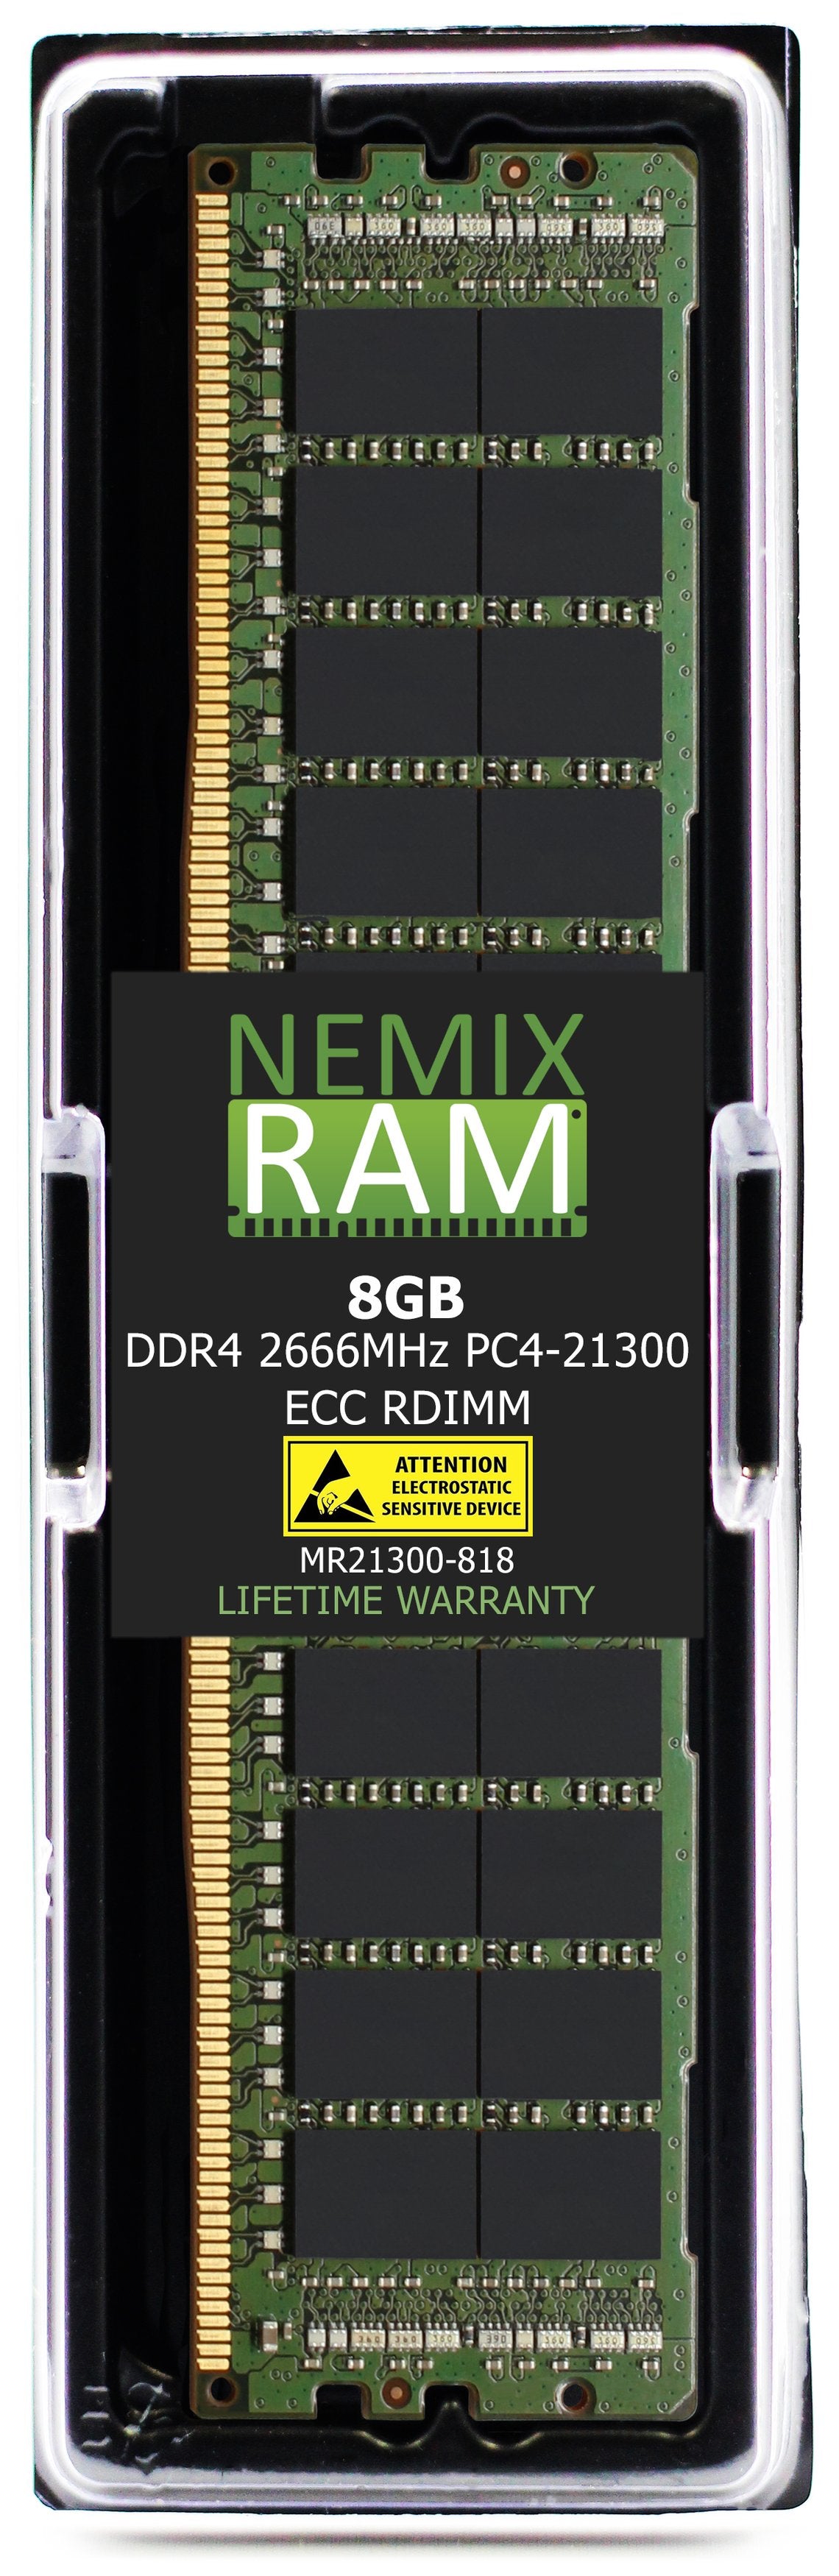 8GB DDR4 2666MHZ PC4-21300 RDIMM Compatible with Supermicro MEM-DR480LB-ER26